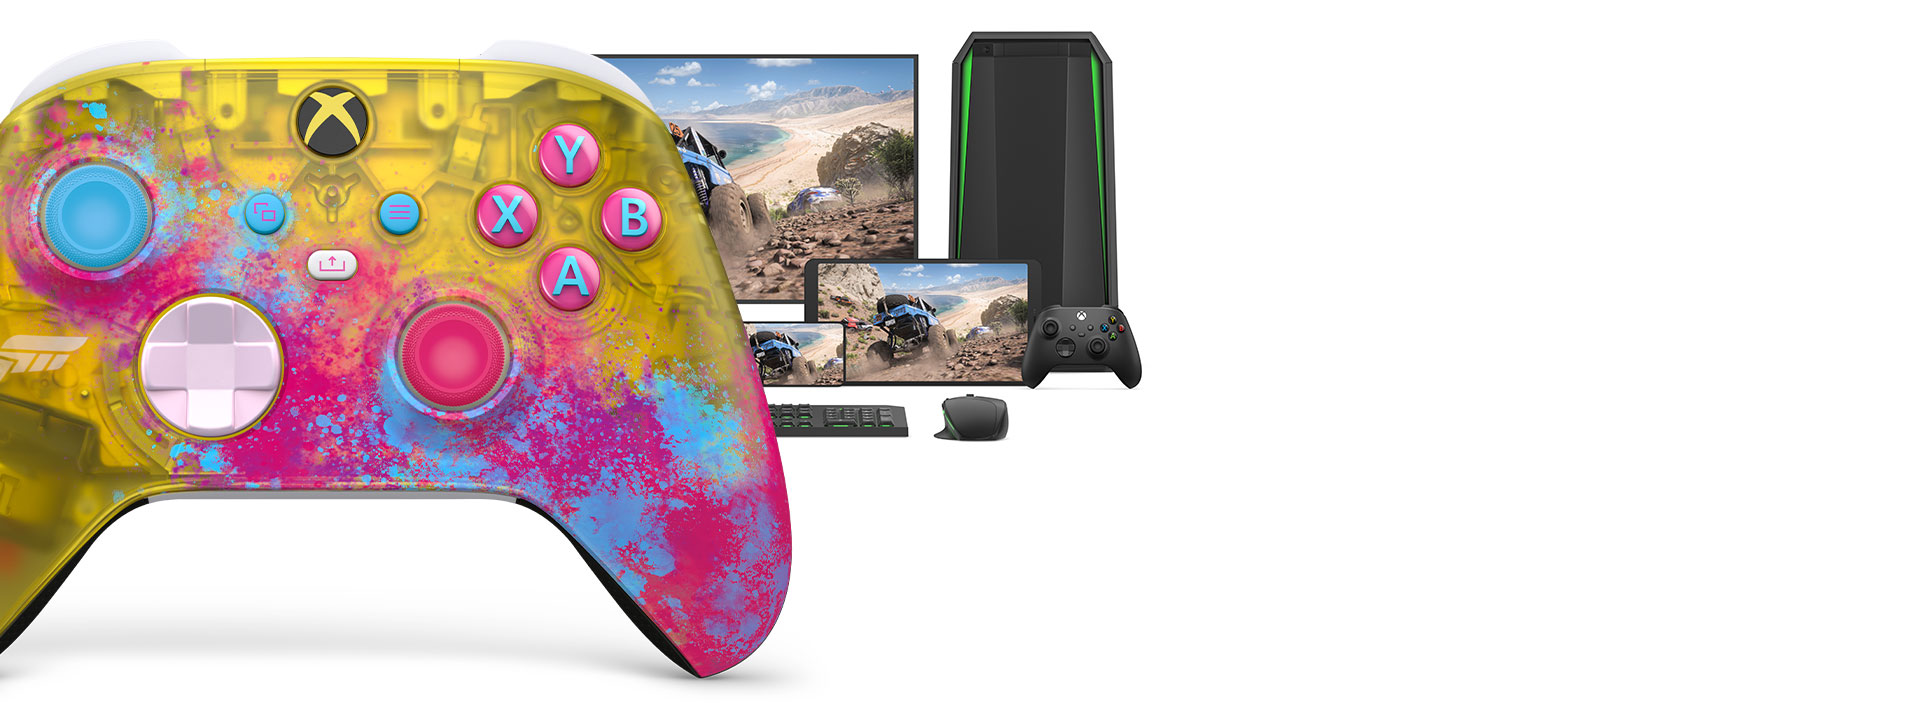 Control inalámbrico Xbox: Forza Horizon 5 con un equipo, TV y Xbox Series S